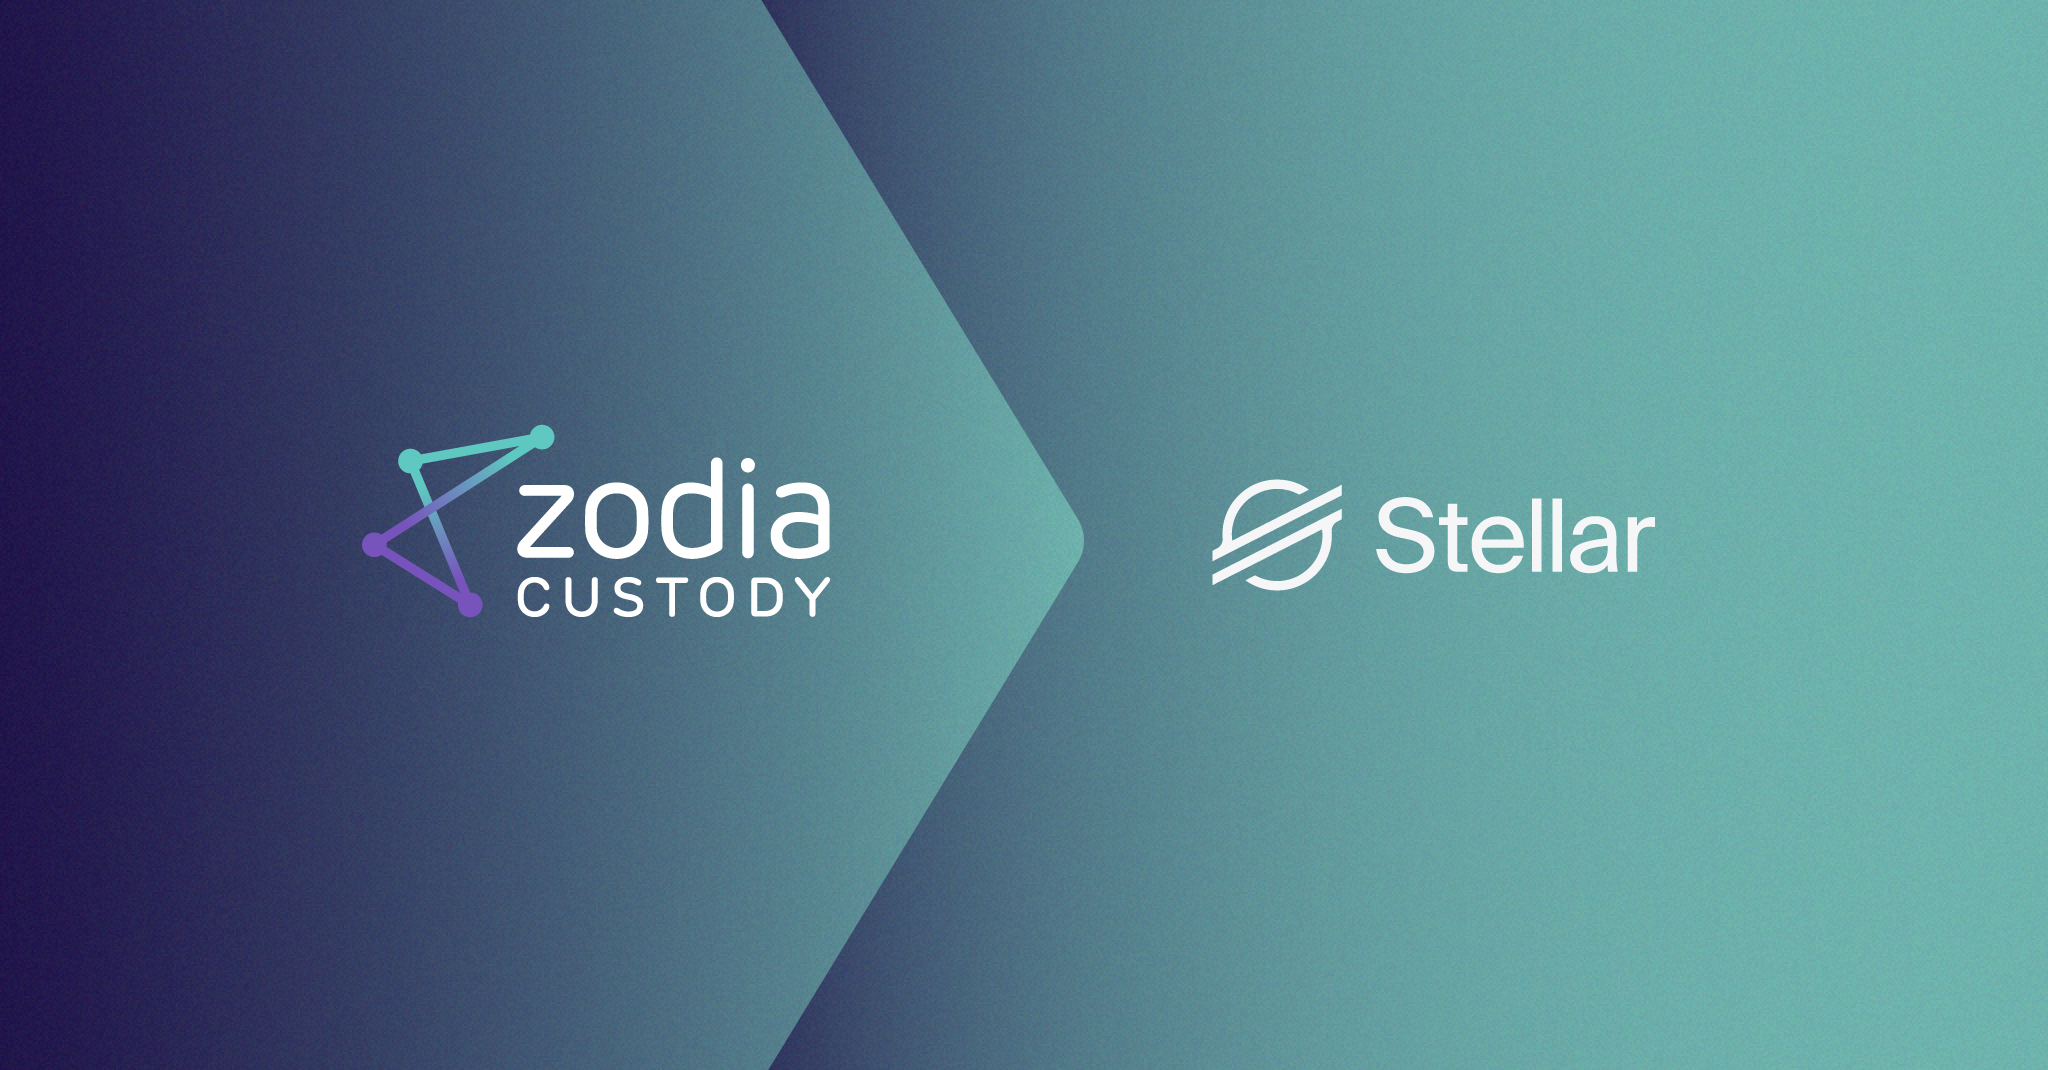 Zodia Custody and Stellar Partnership announcement.